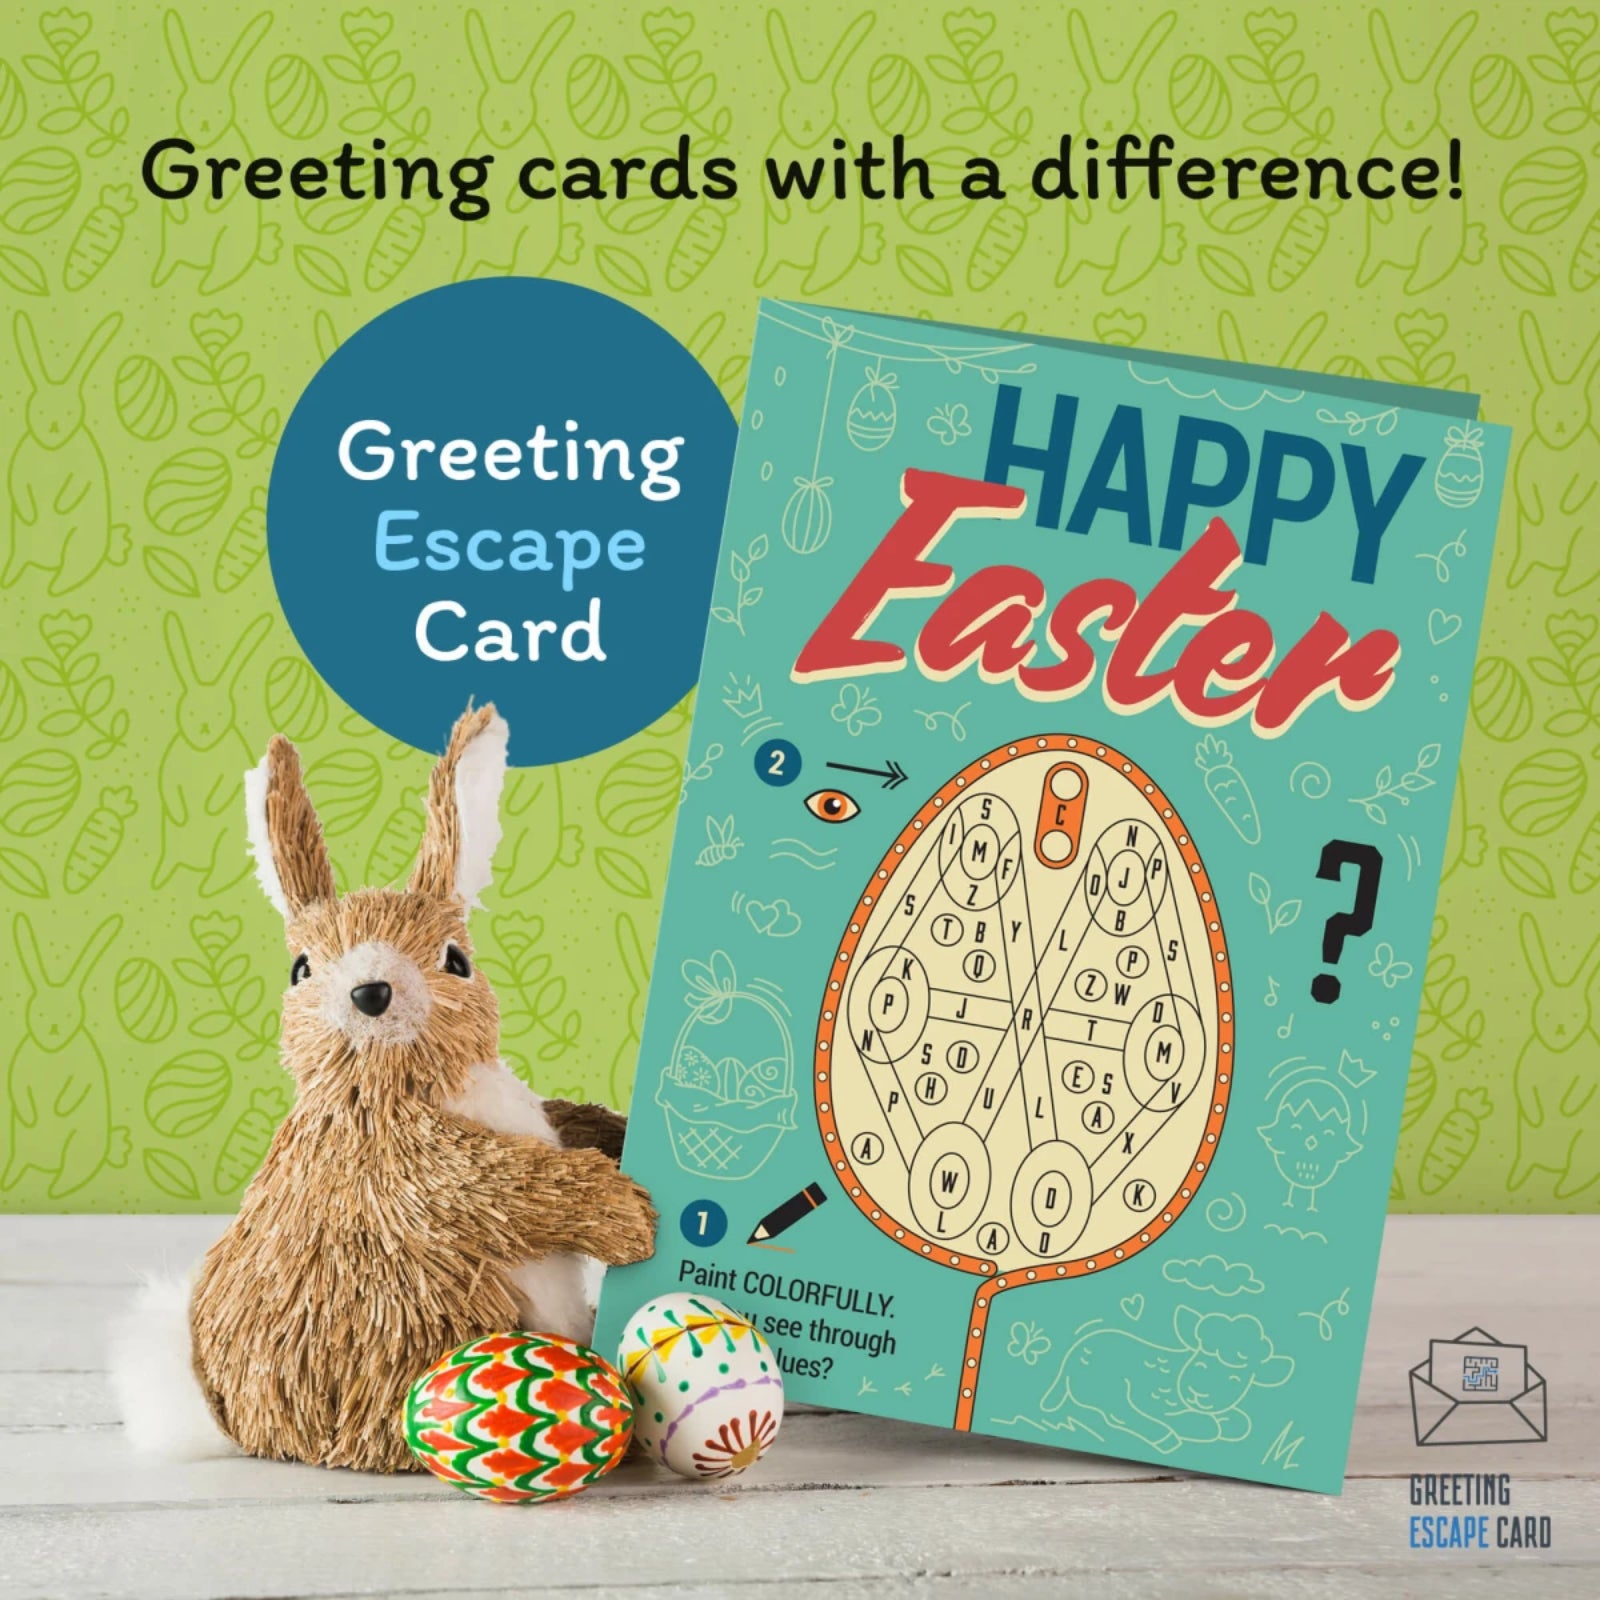 Happy Easter Escape Greeting Card (EN) - iDventure